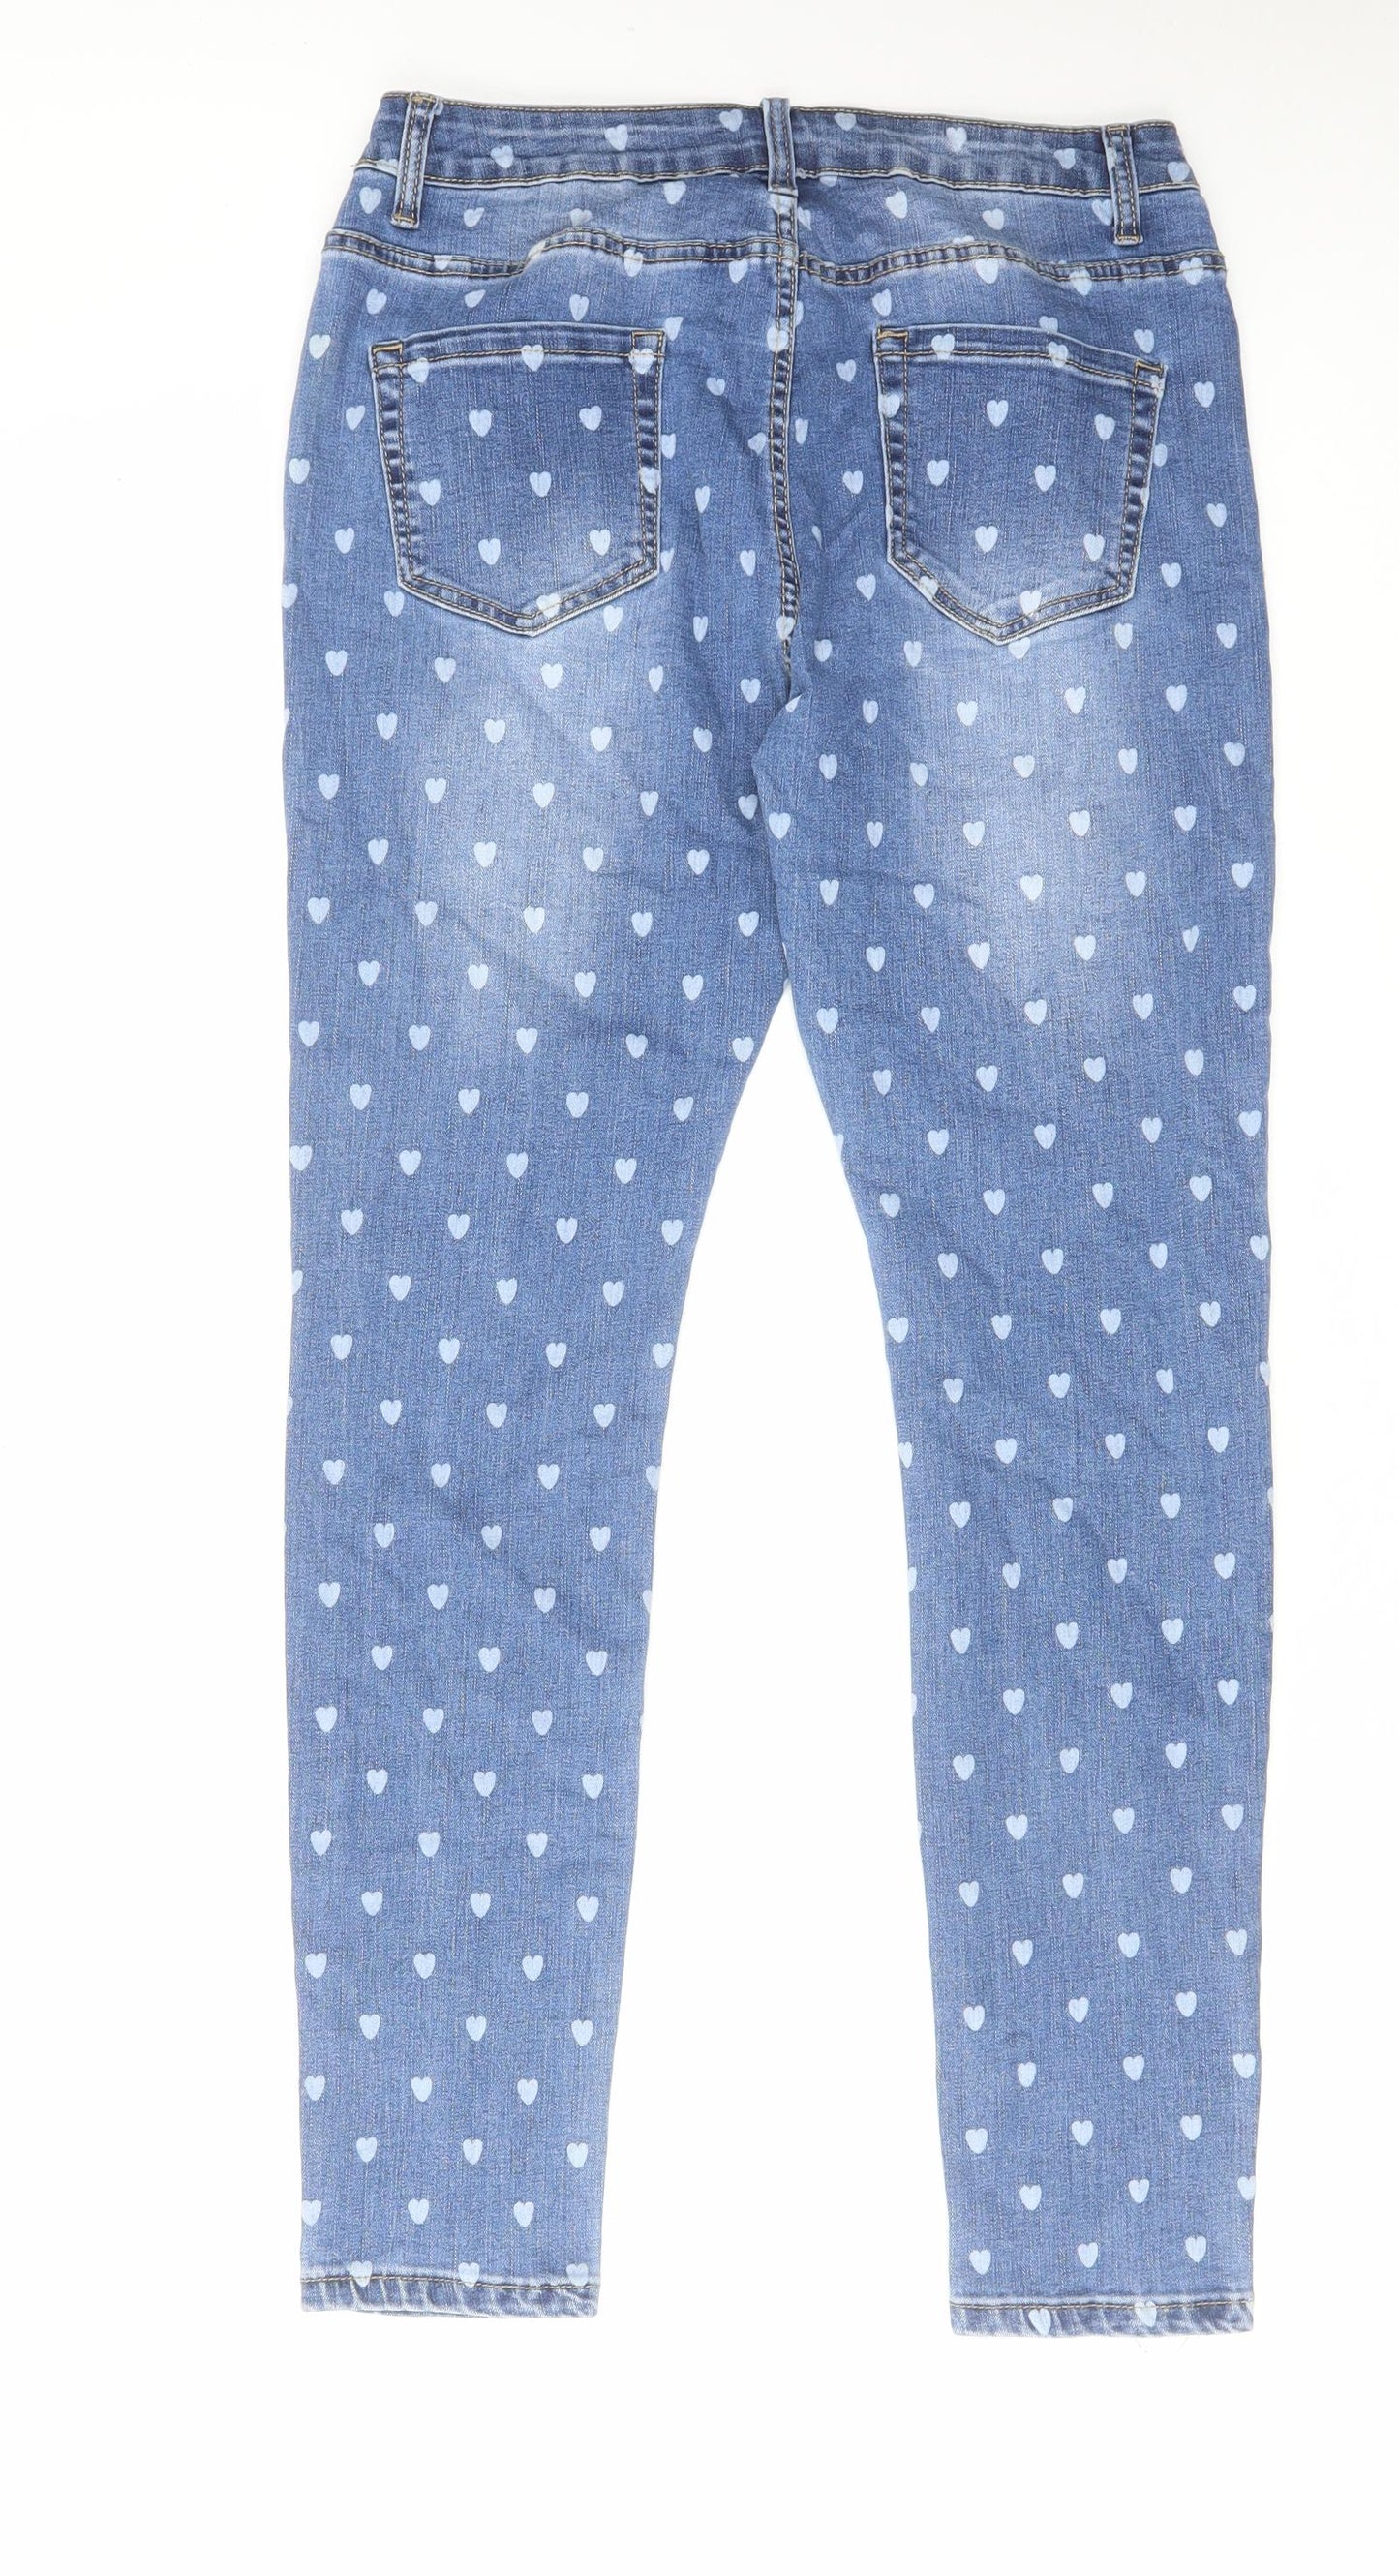 Colourful Womens Blue Geometric Cotton Skinny Jeans Size 12 L28 in Regular Zip - Heart Pattern